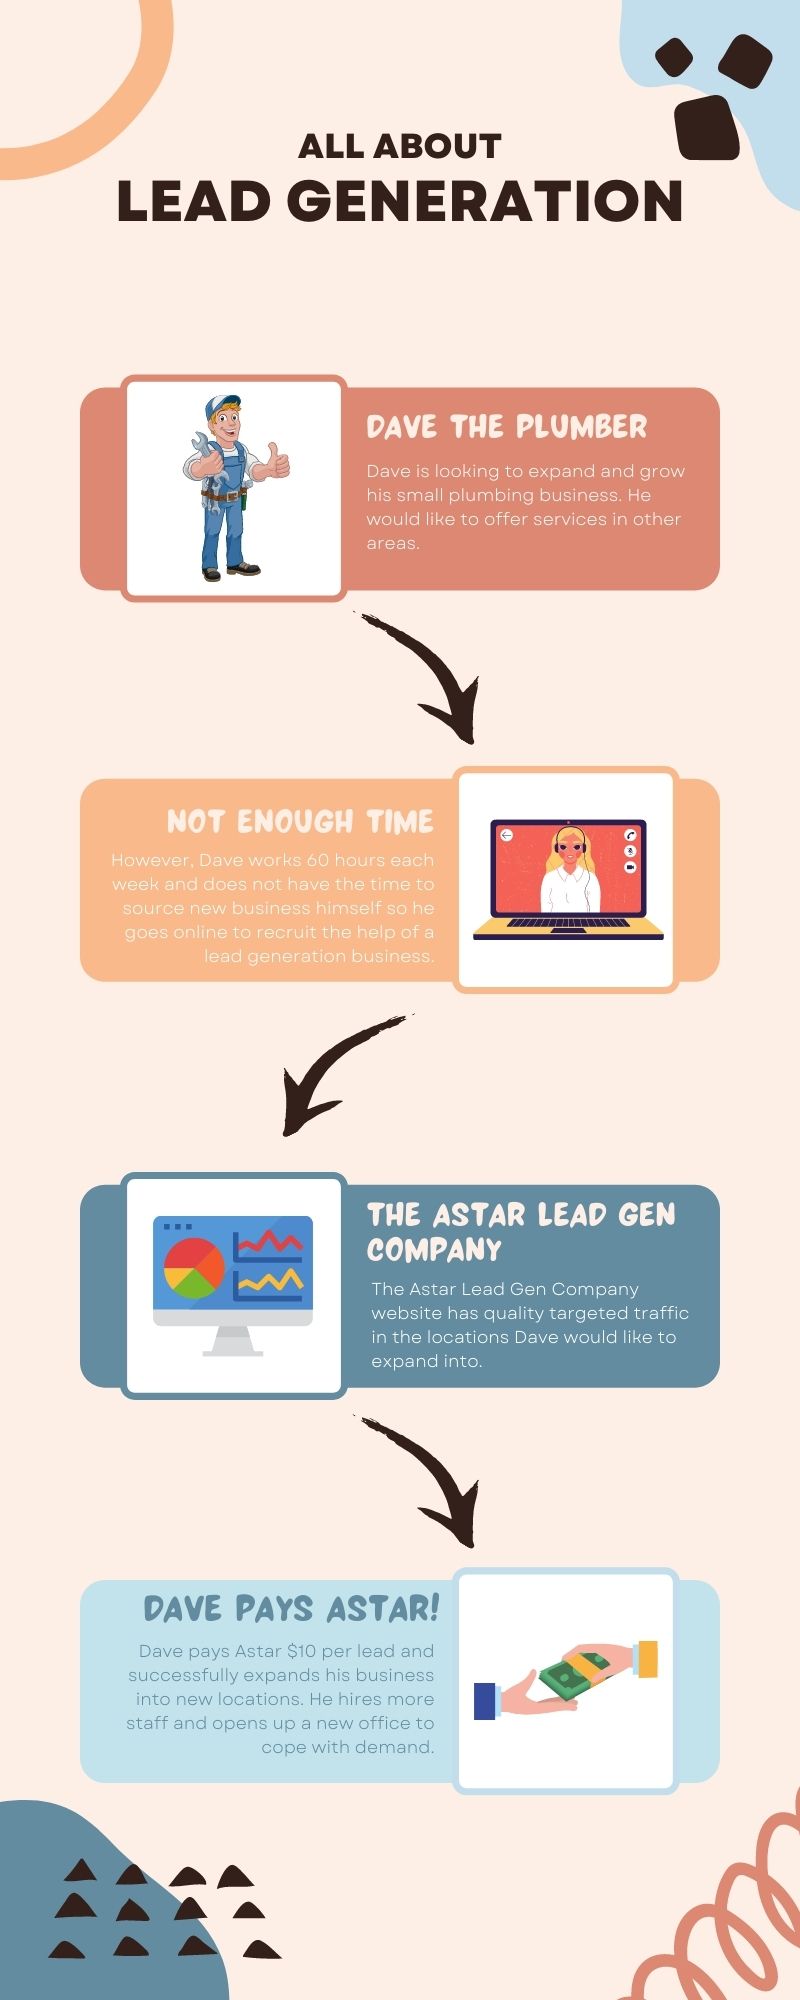 Lead Generation Infographic